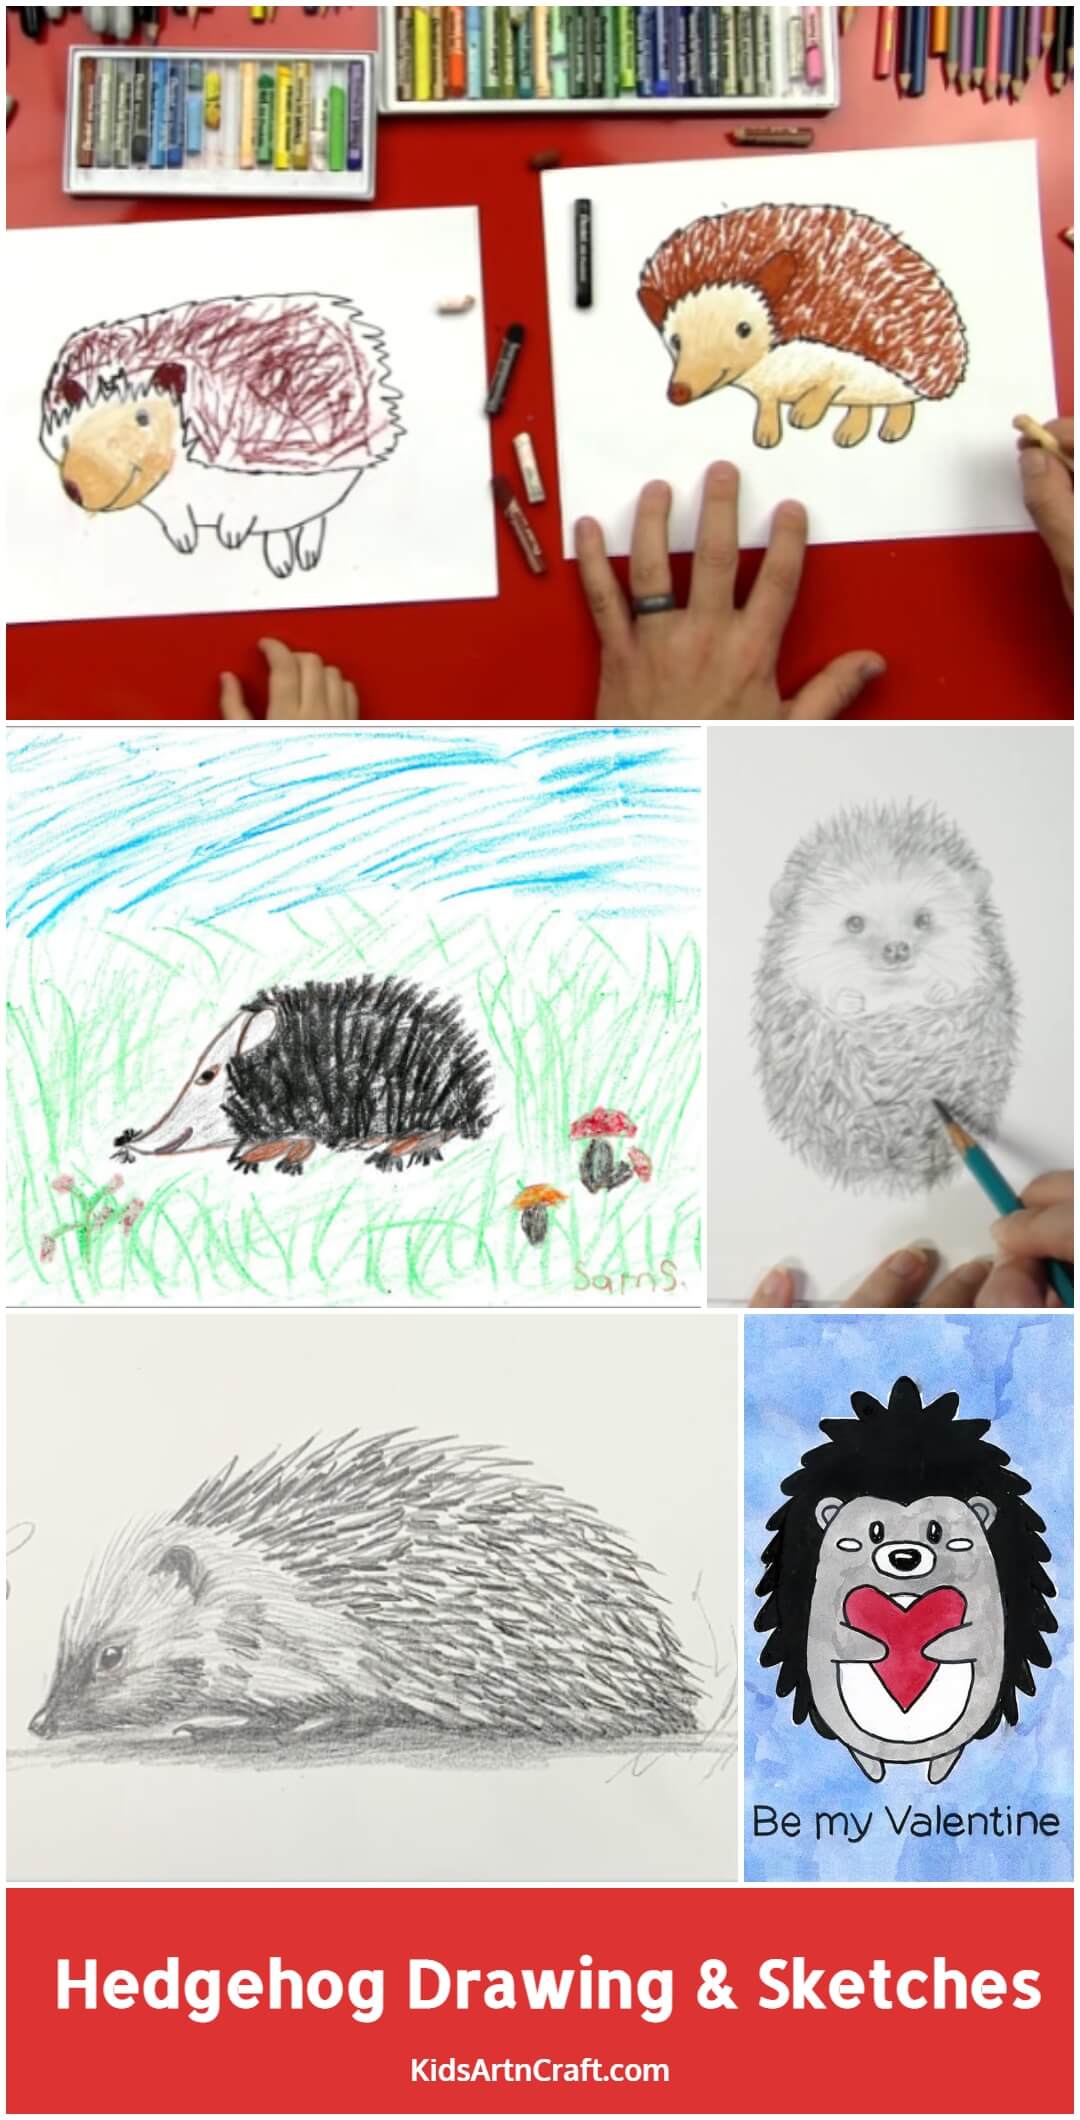 Hedgehog Drawing & Sketches for Kids